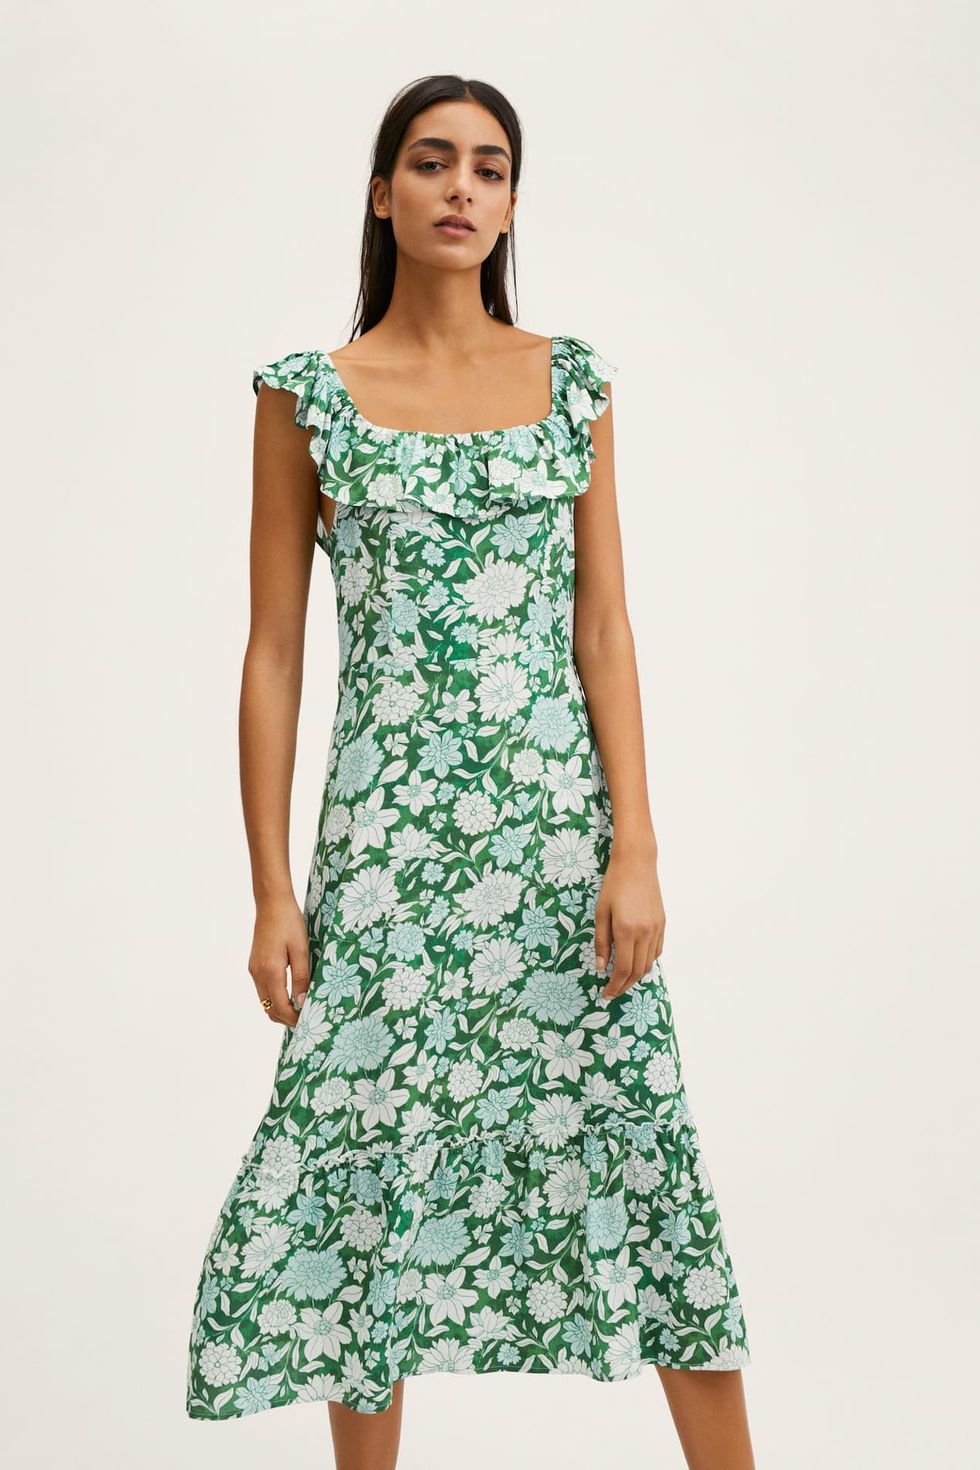 Floral print ruffle dress: Floral dresses